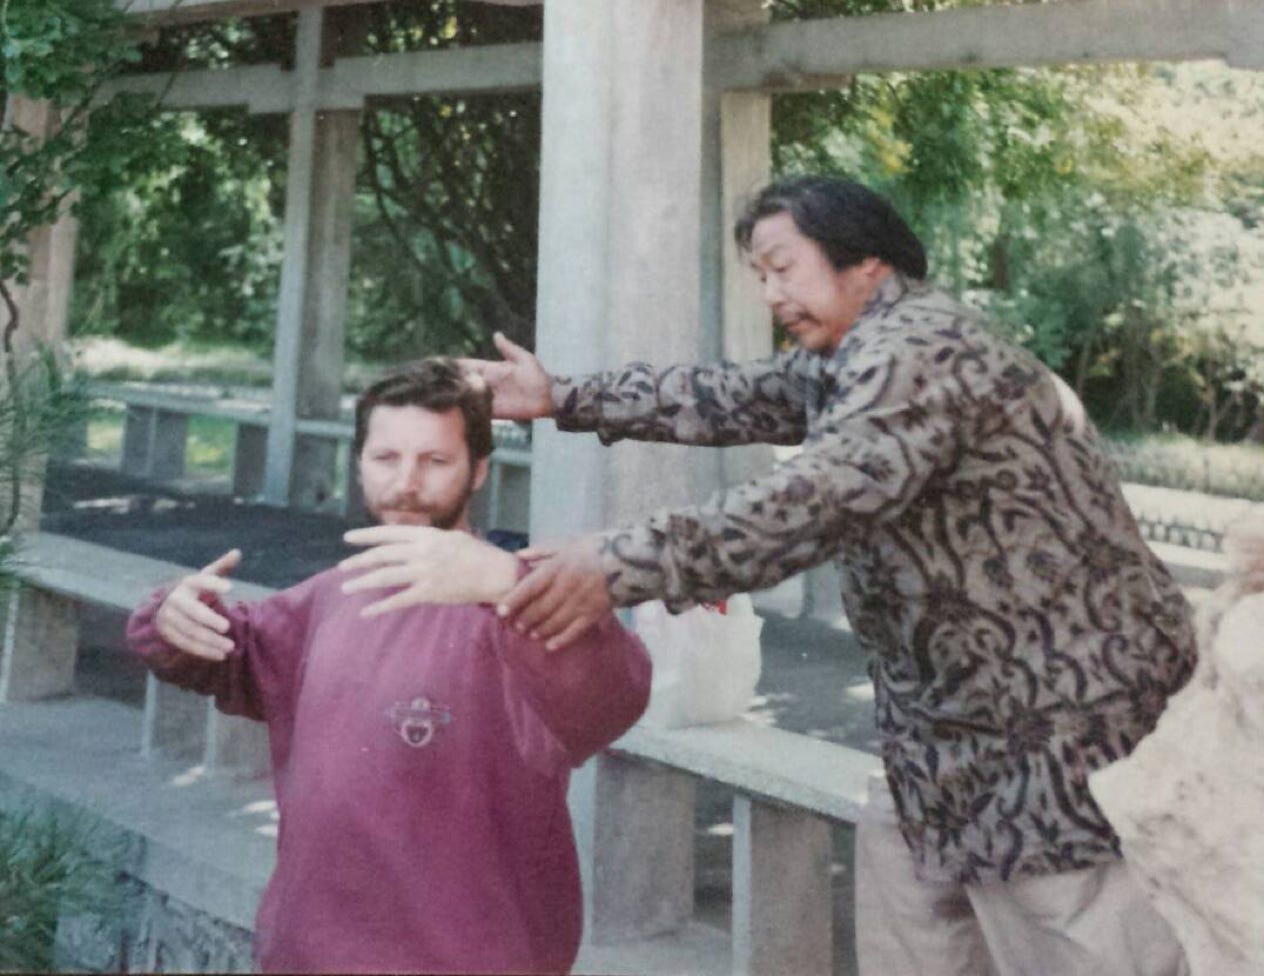 Jan Voormeij getting personal advice from Yiquan master Wang Xuanjie.